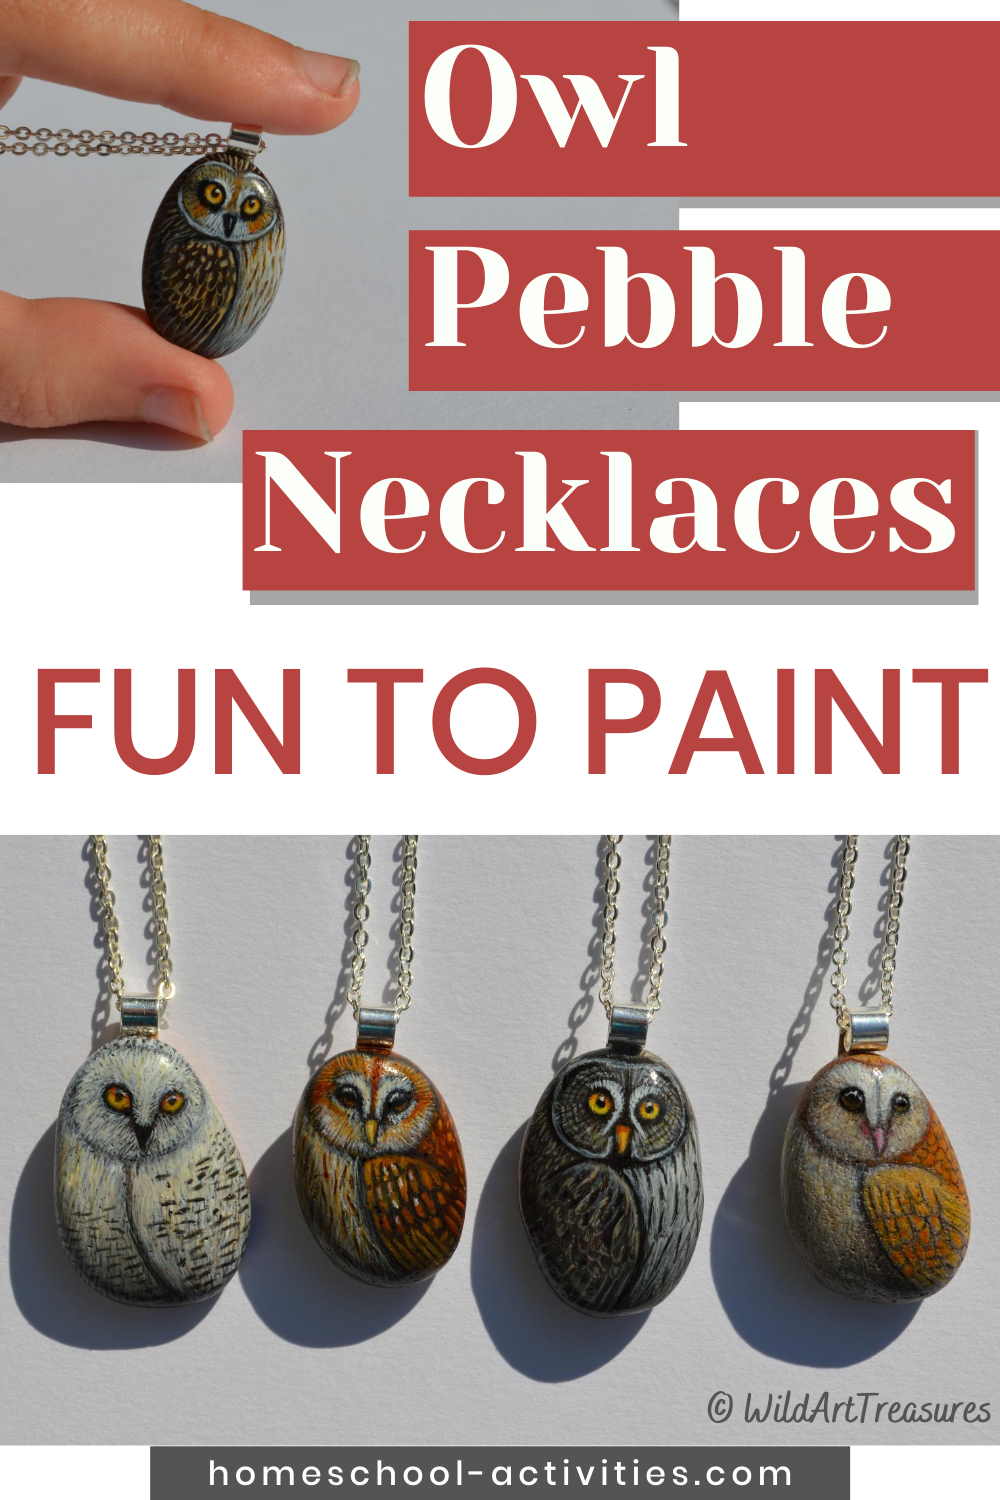 Owl pebble necklaces